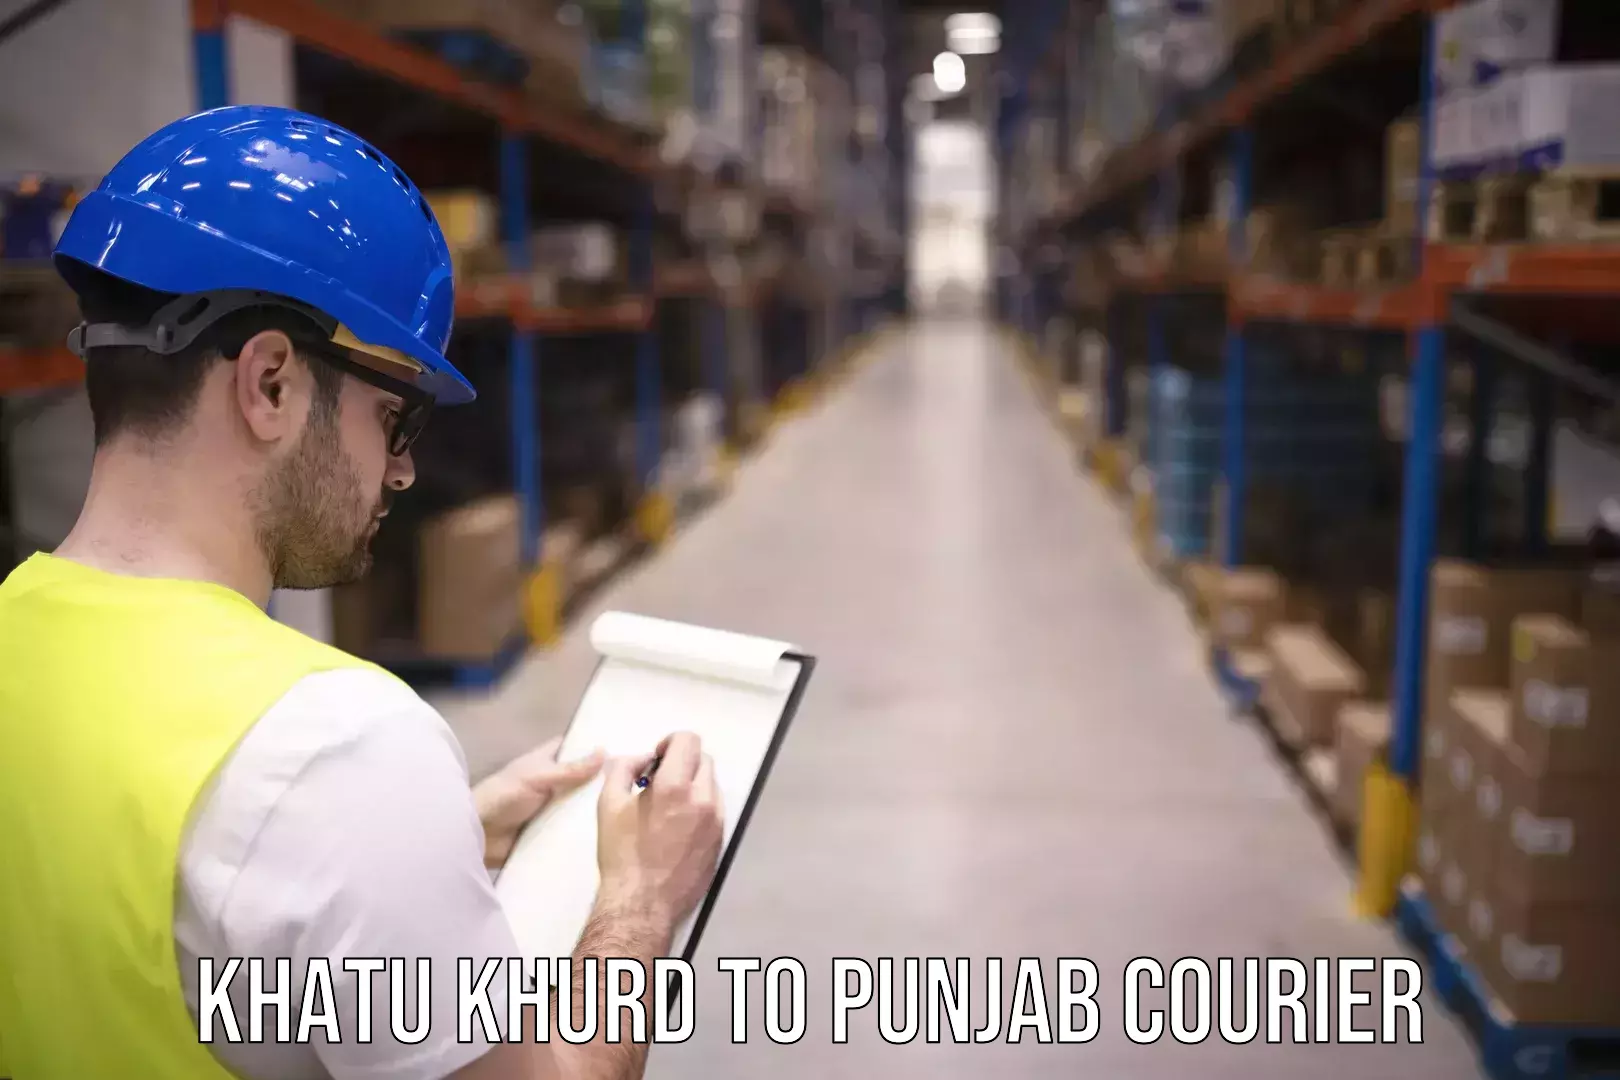 Courier app Khatu Khurd to Punjab